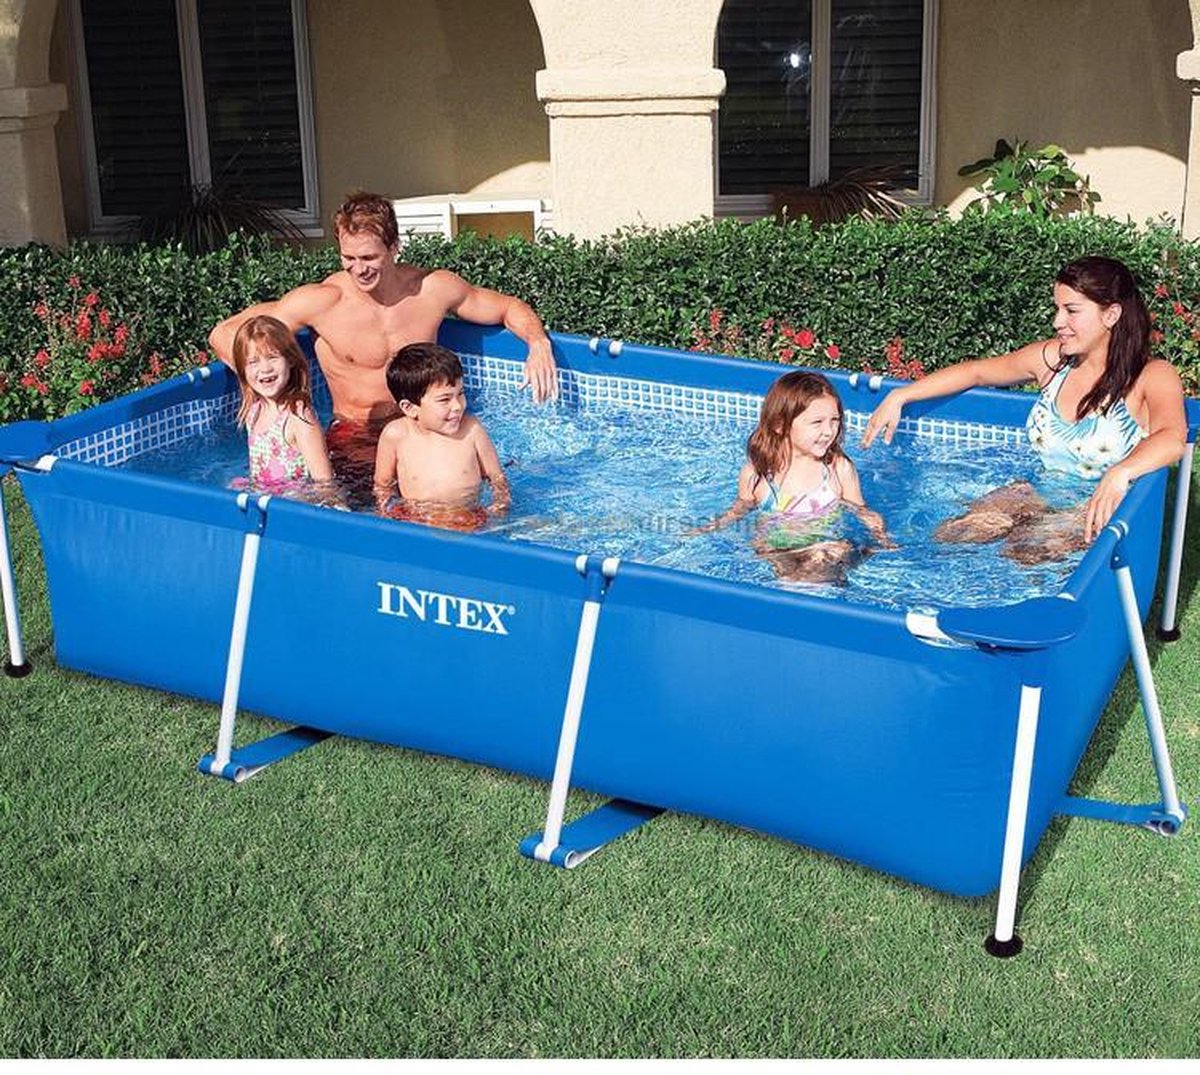 Intex Piscine Intex 260x160x65 cm piscine jardin enfants/familiale pataugeoire en PVC 